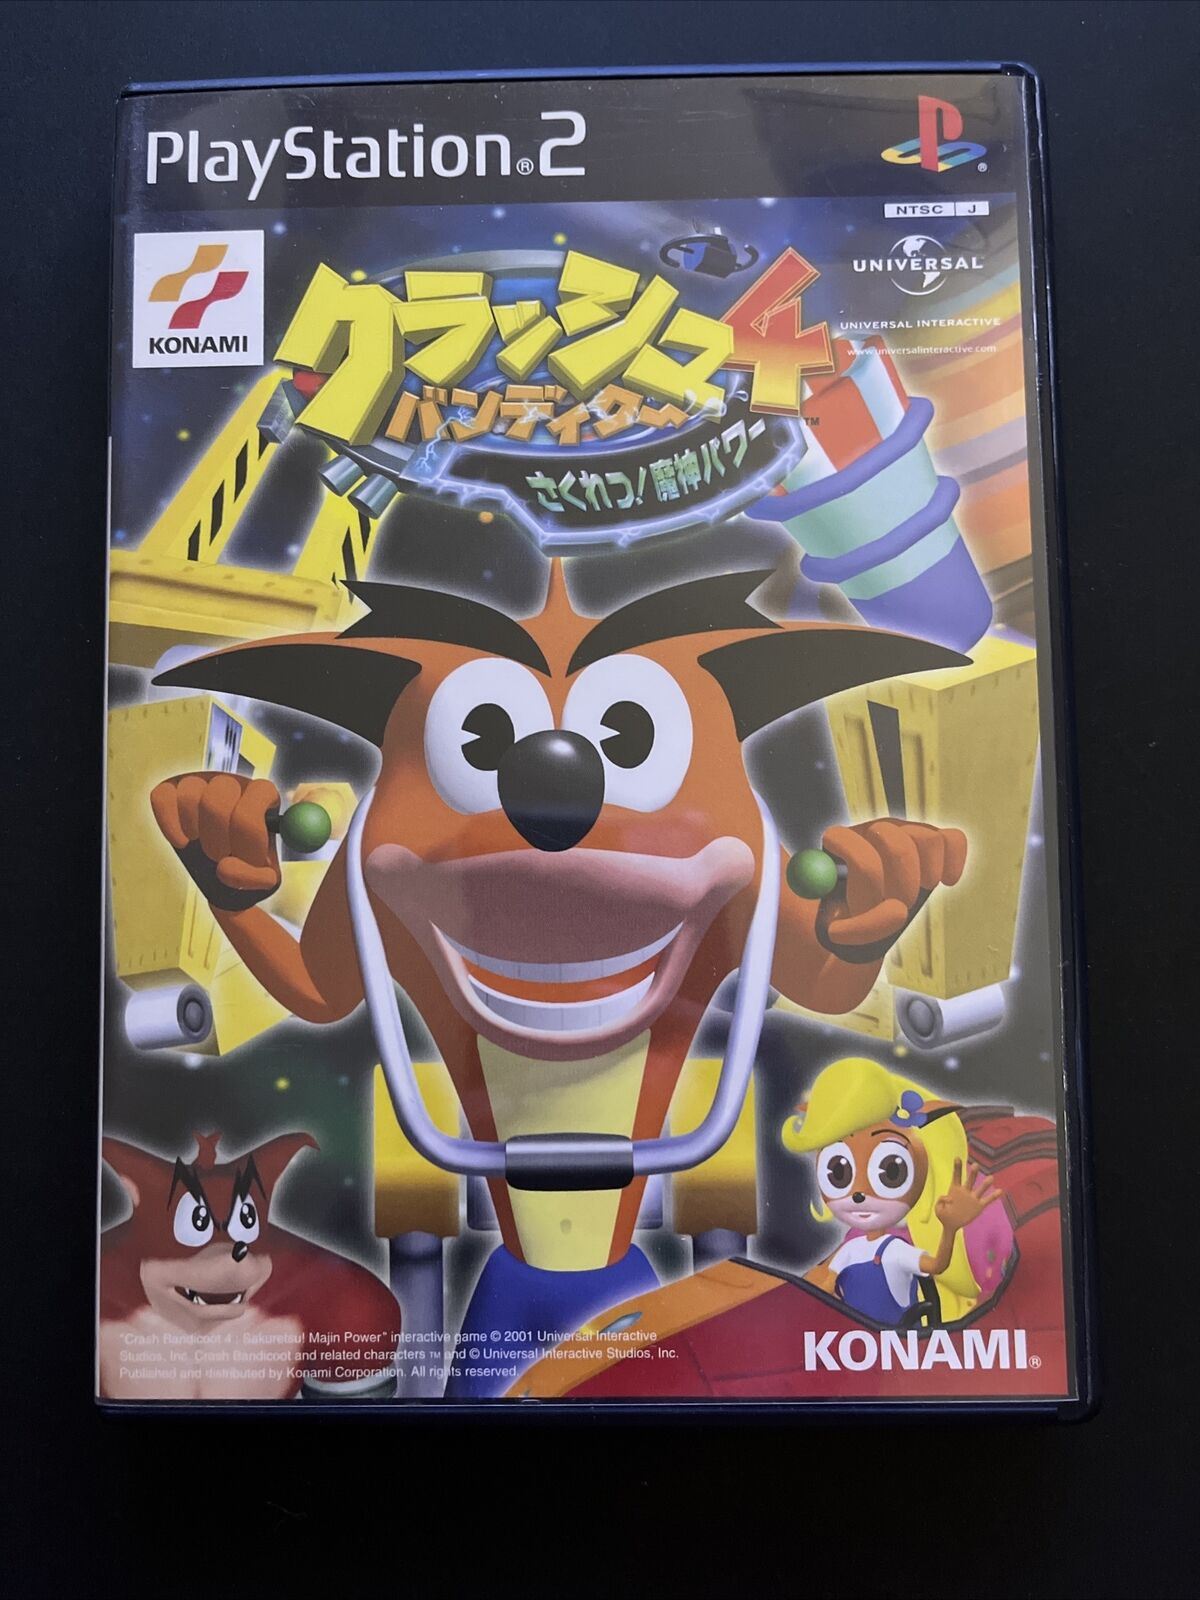 Crash Bandicoot 4 - PlayStation PS2 NTSC-J Japan Platformer Game